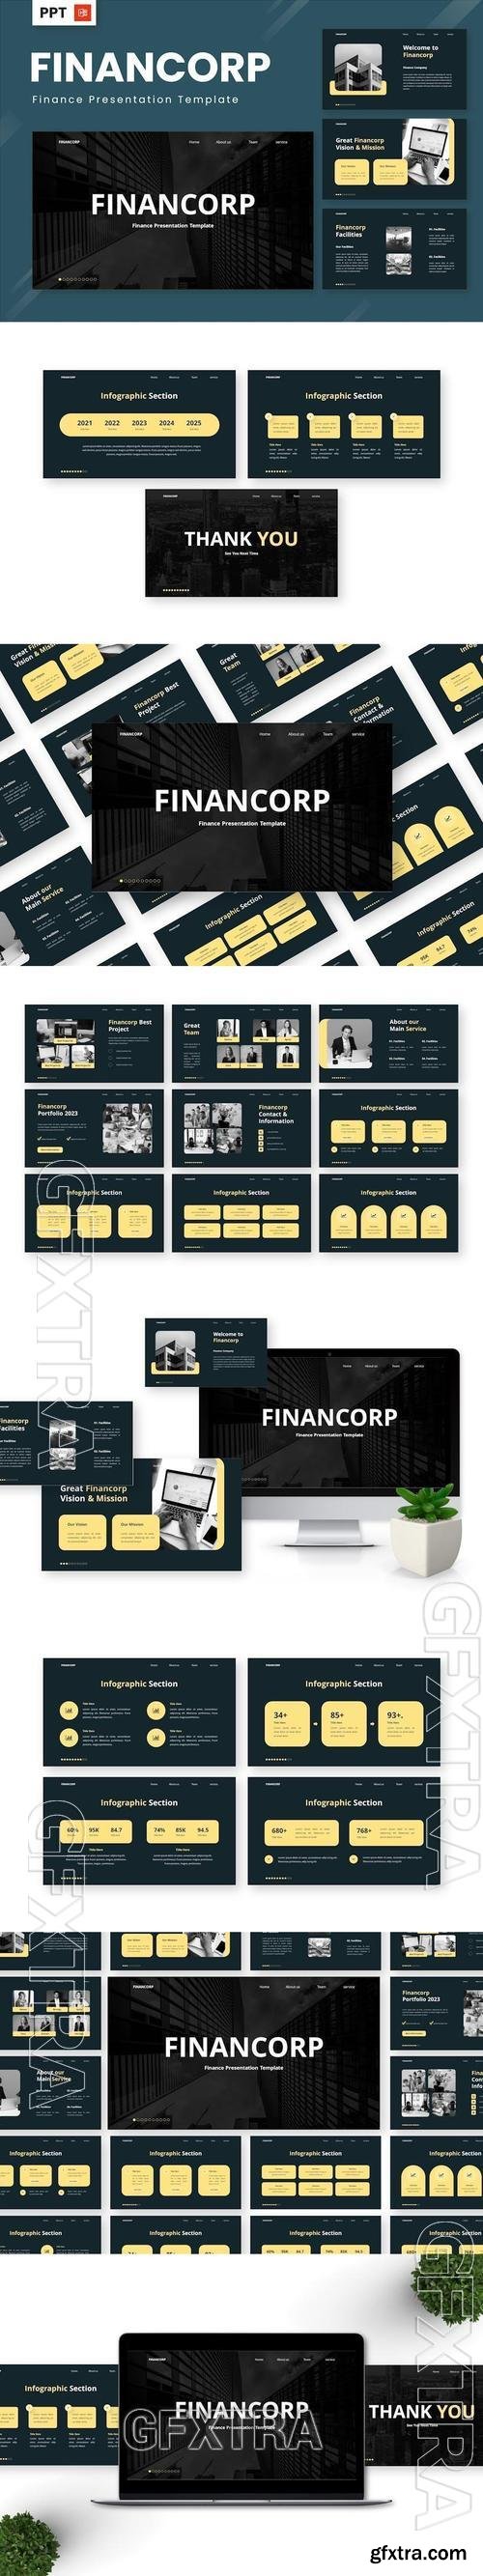 Financorp - Finance Powerpoint Templates T4XS6LU